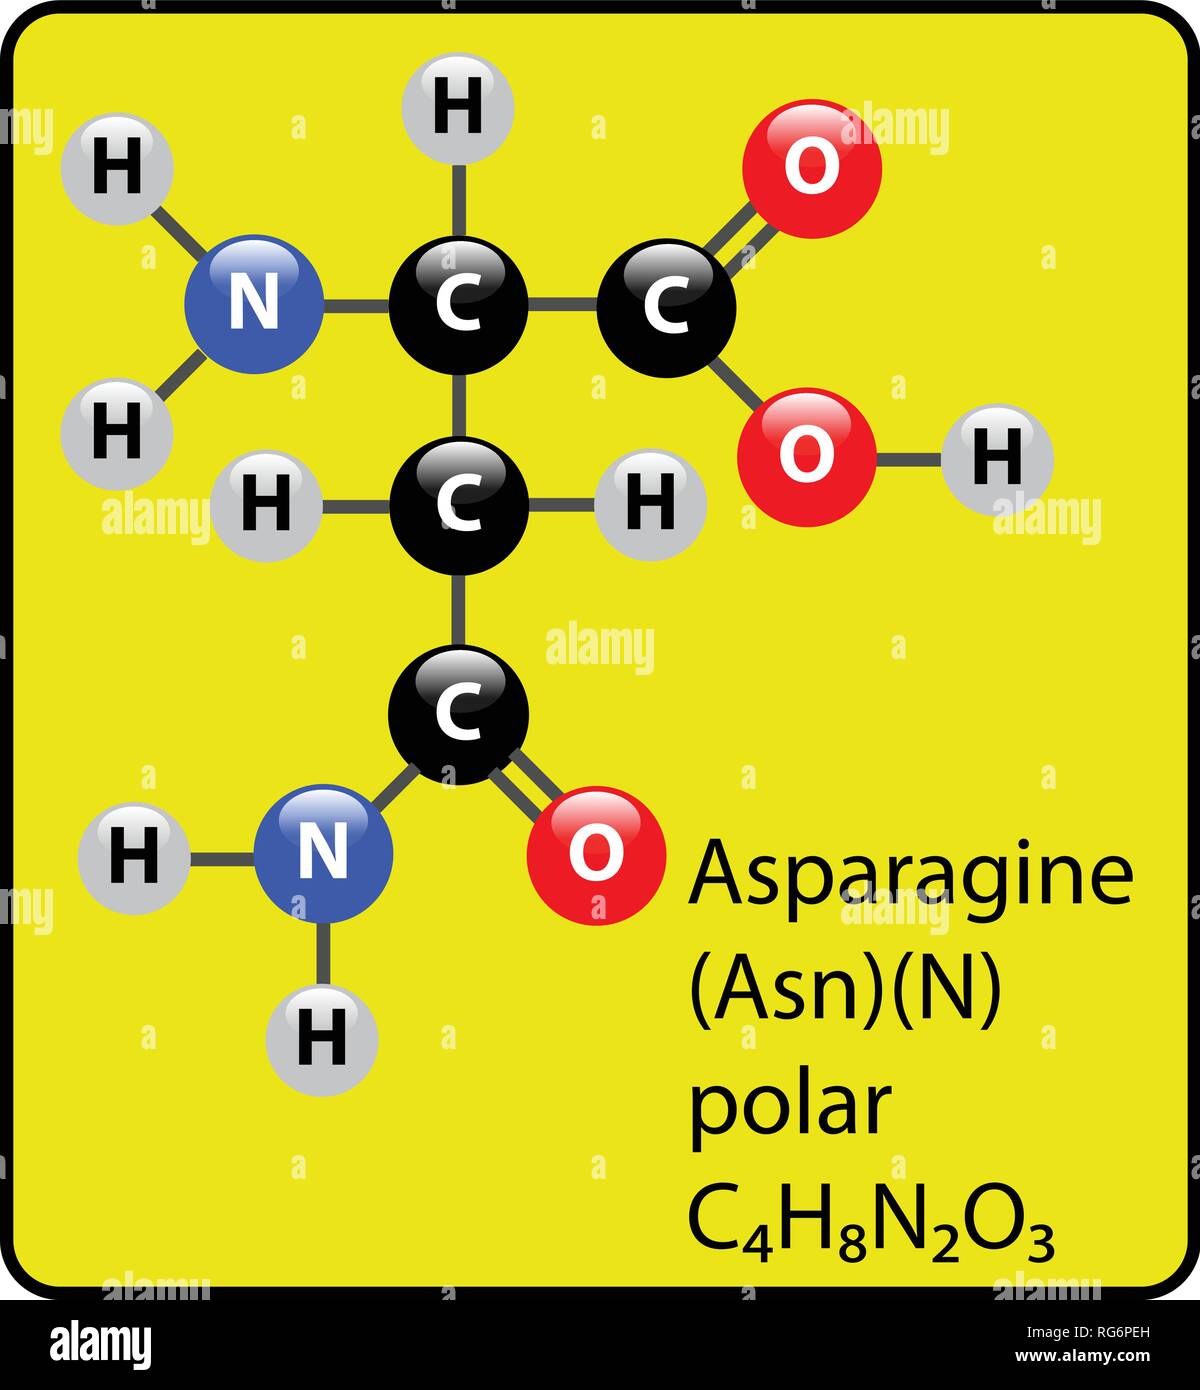 Asparagine Amino Acid Molecule Ball and Stick Structure Stock Vector